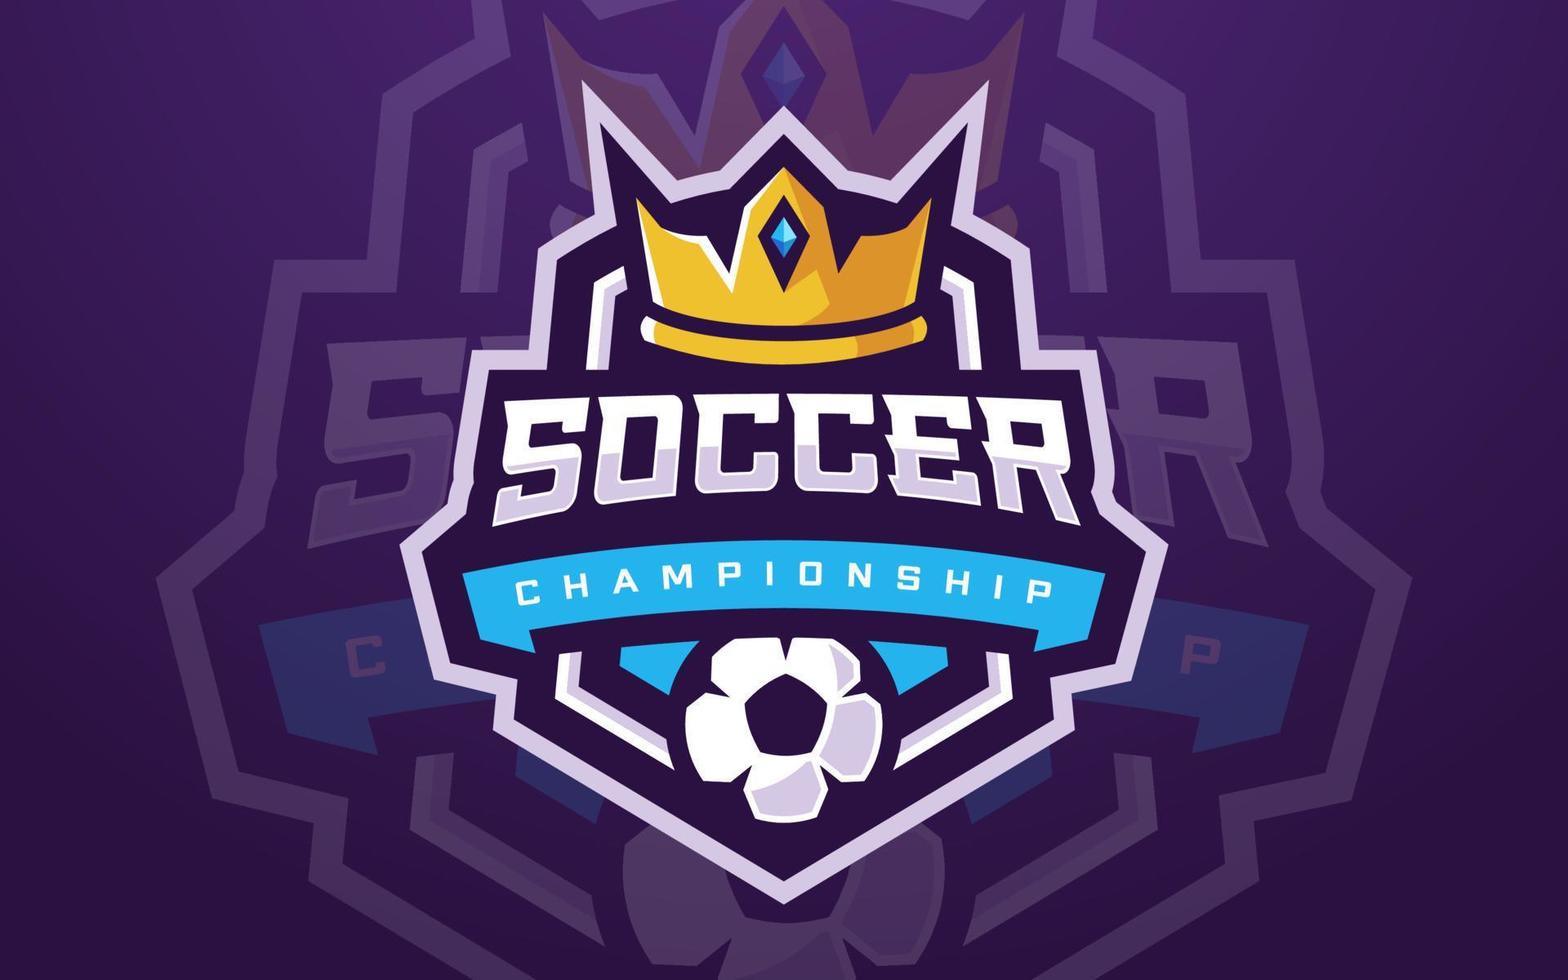 professionele voetbalclub logo sjabloon met kroon voor sportteam en toernooi vector